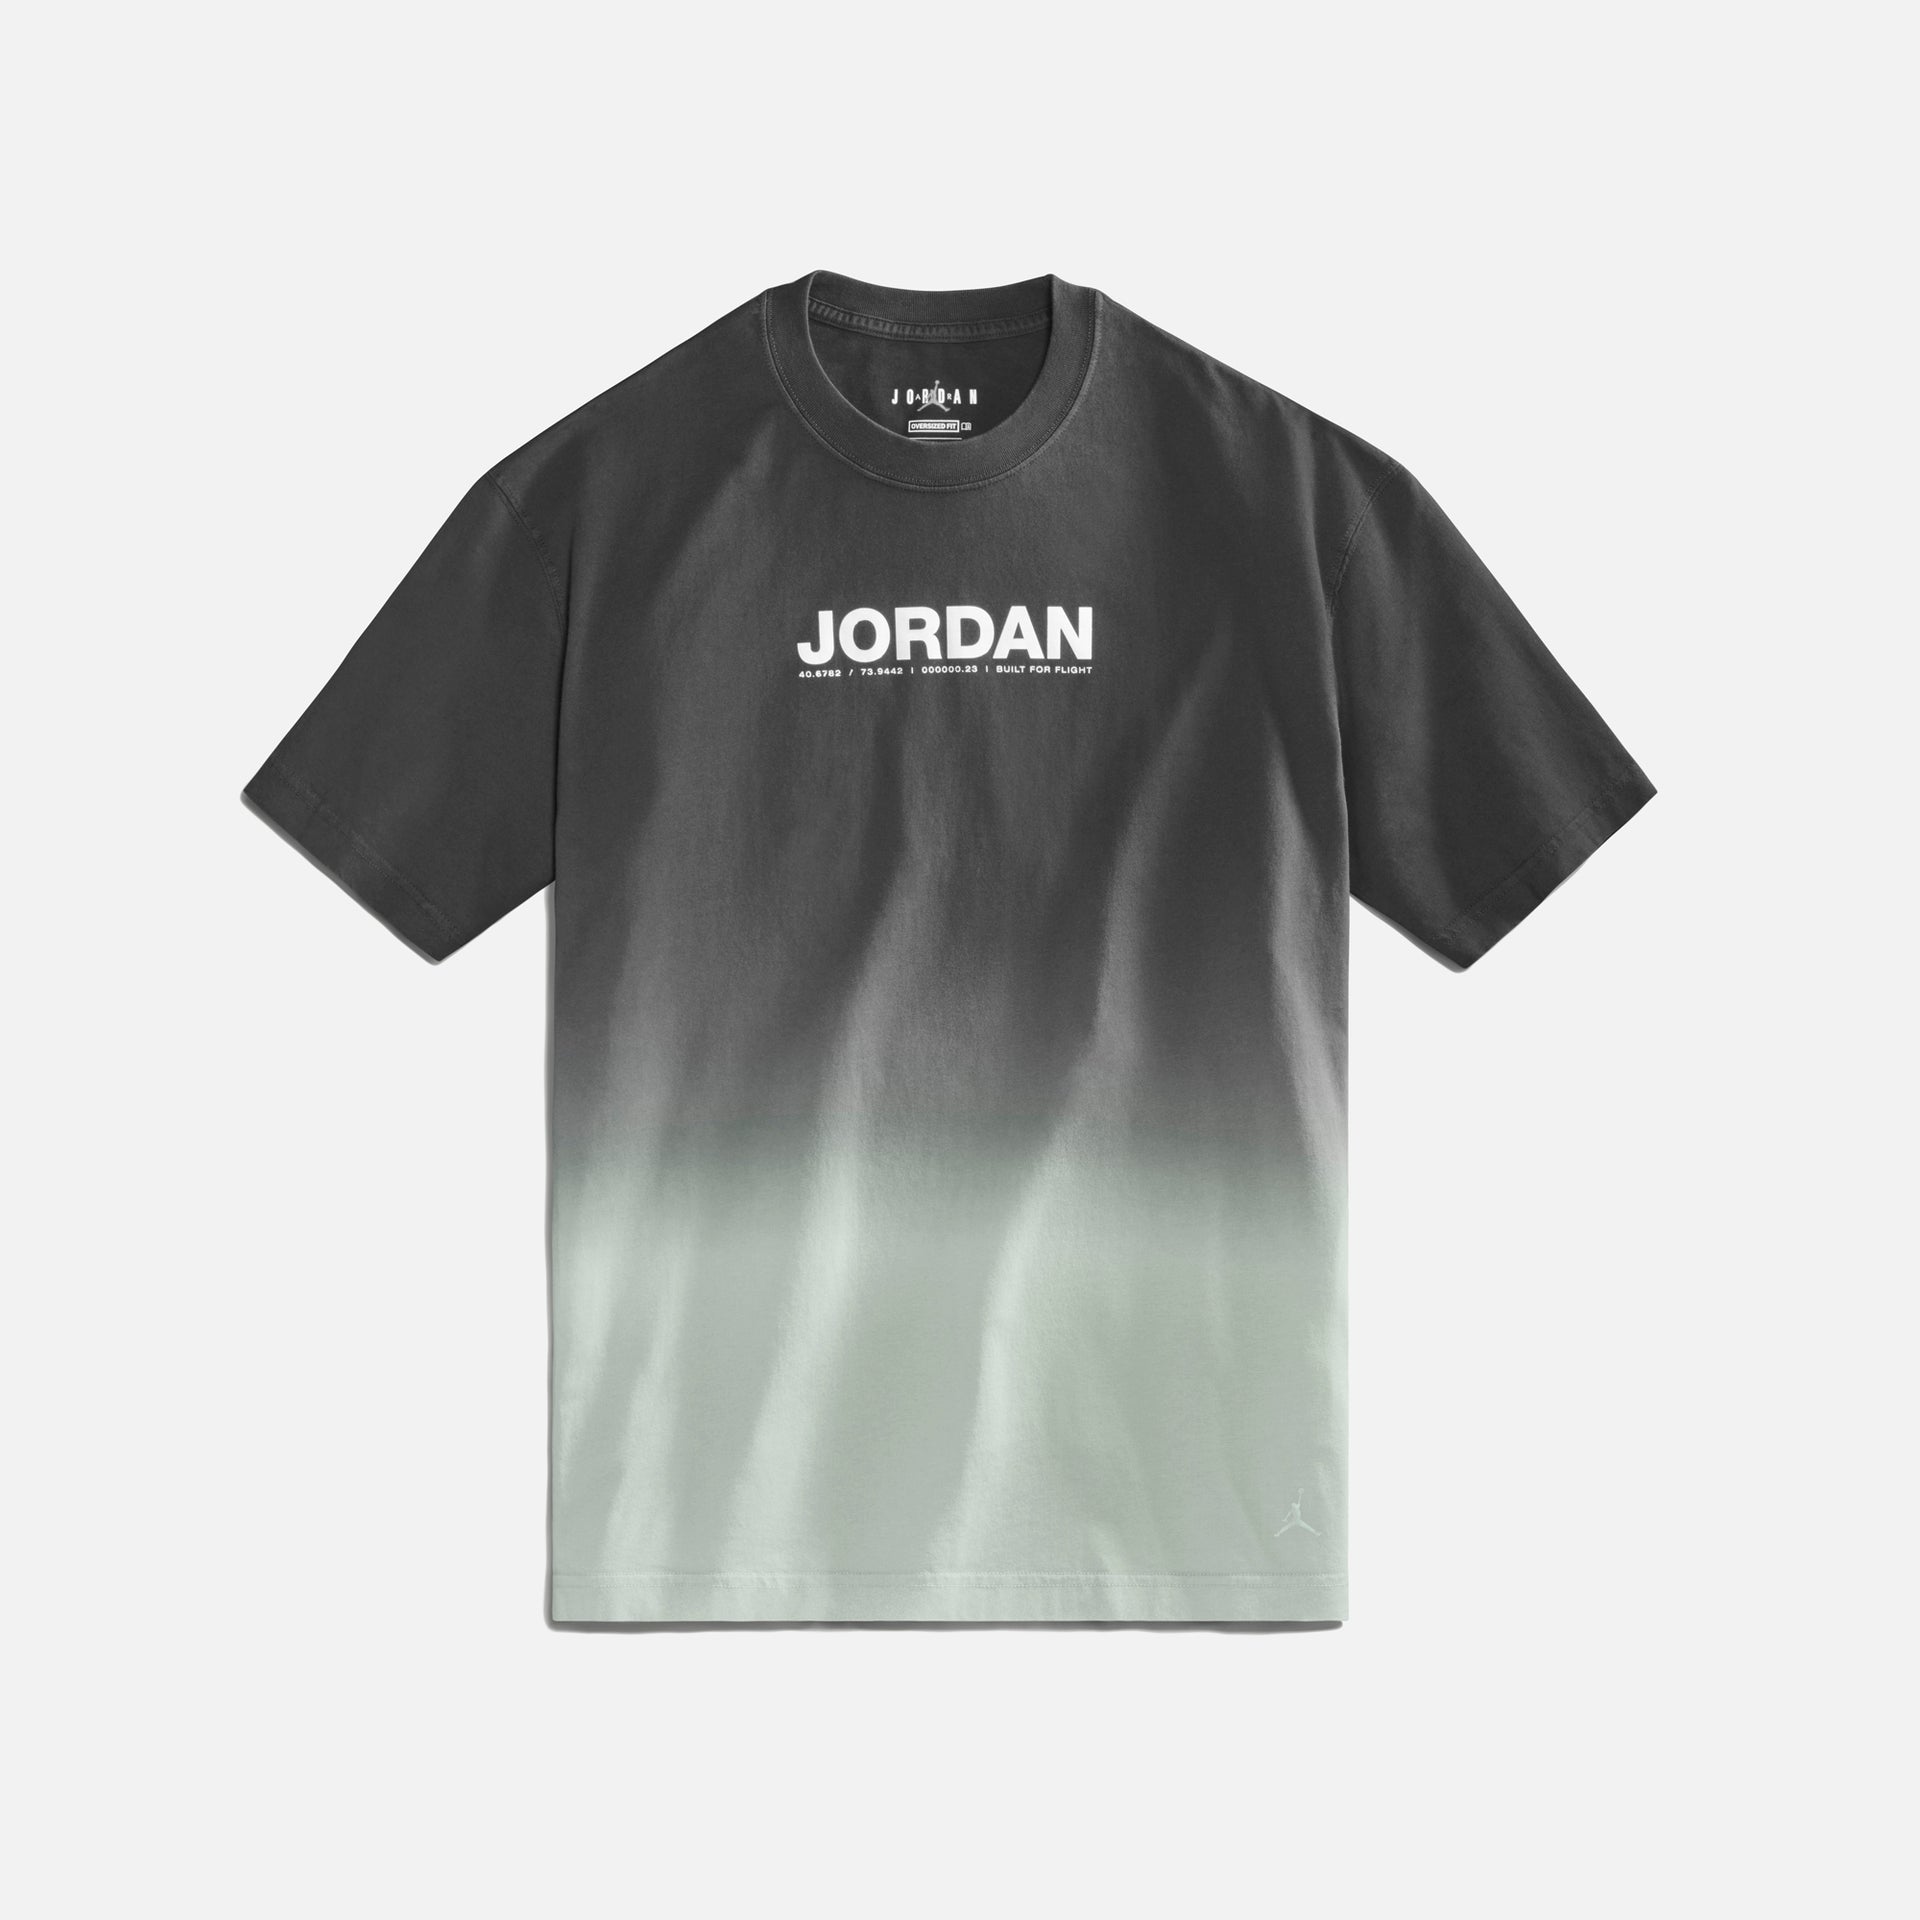 Nike WMNS Jordan Tee - Particle Grey / Black / Reflective Silver